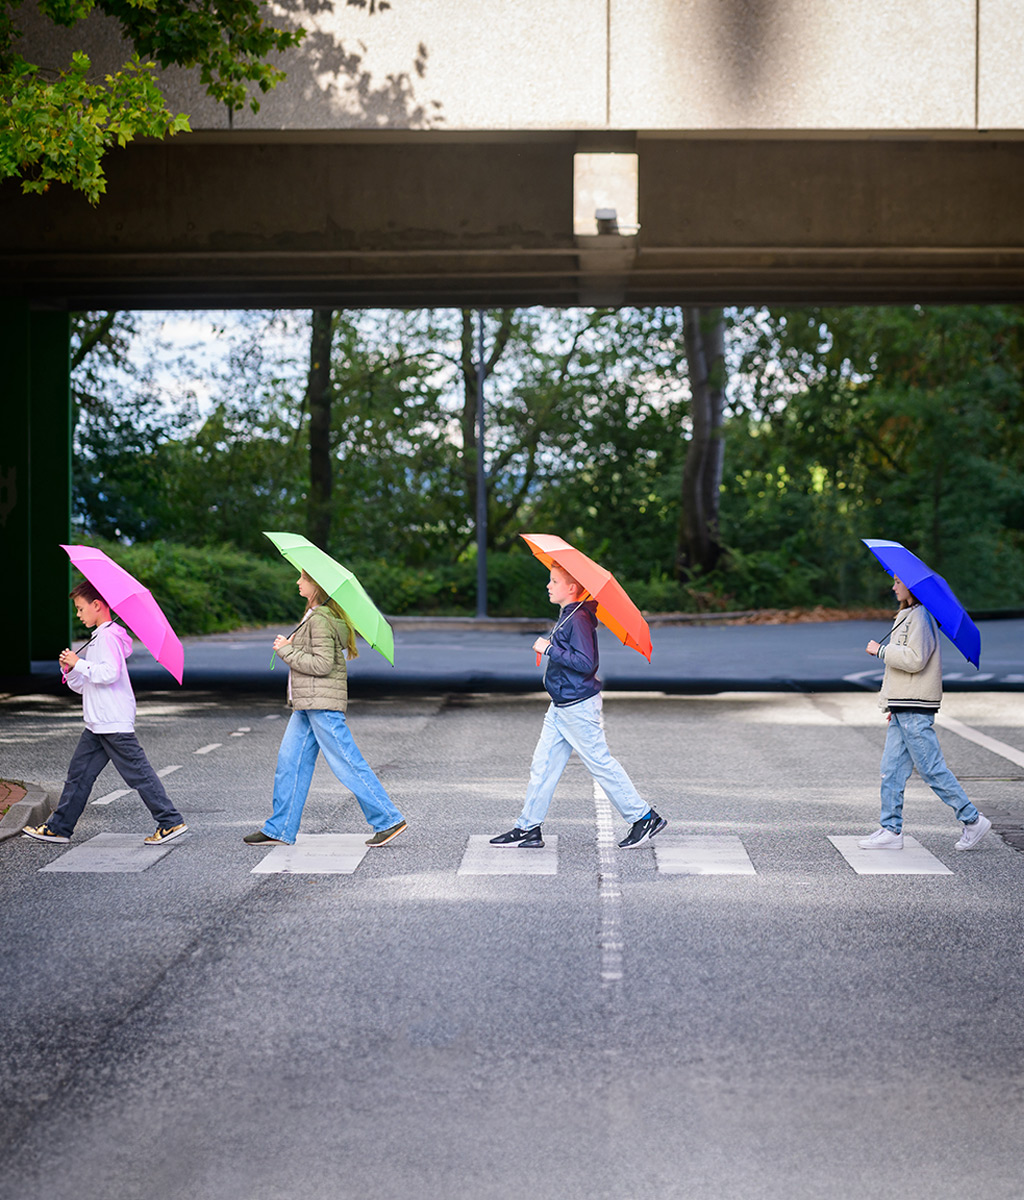 Children with colourful umbrellas on zebra crossings